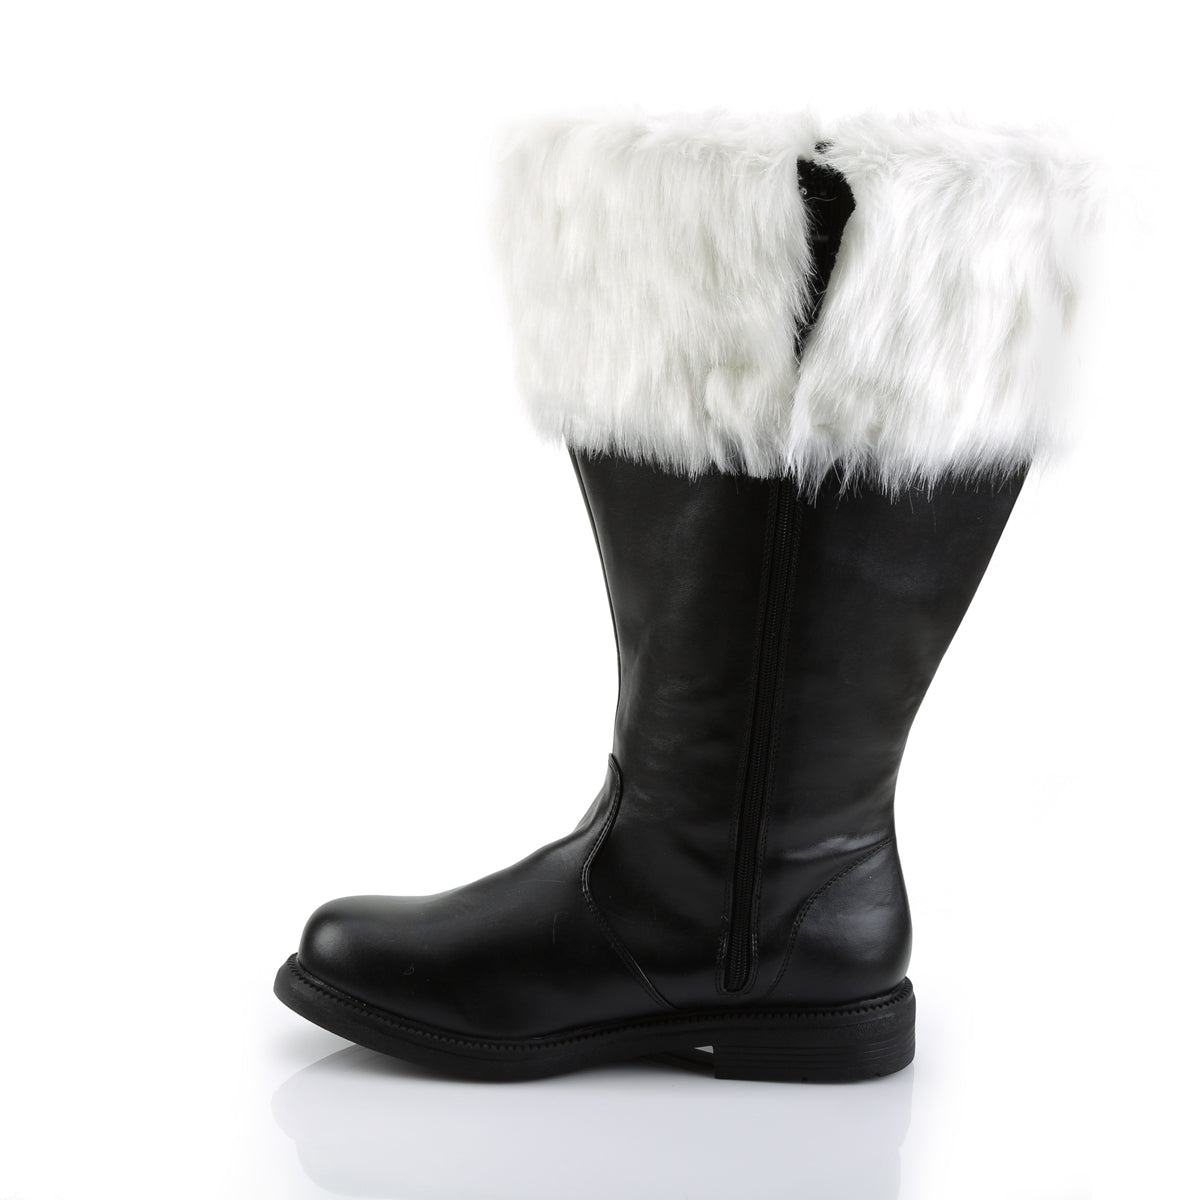 SANTA-106WC Funtasma 1" Black White Wide Width/Shaft Boots Funtasma Costume Shoes 